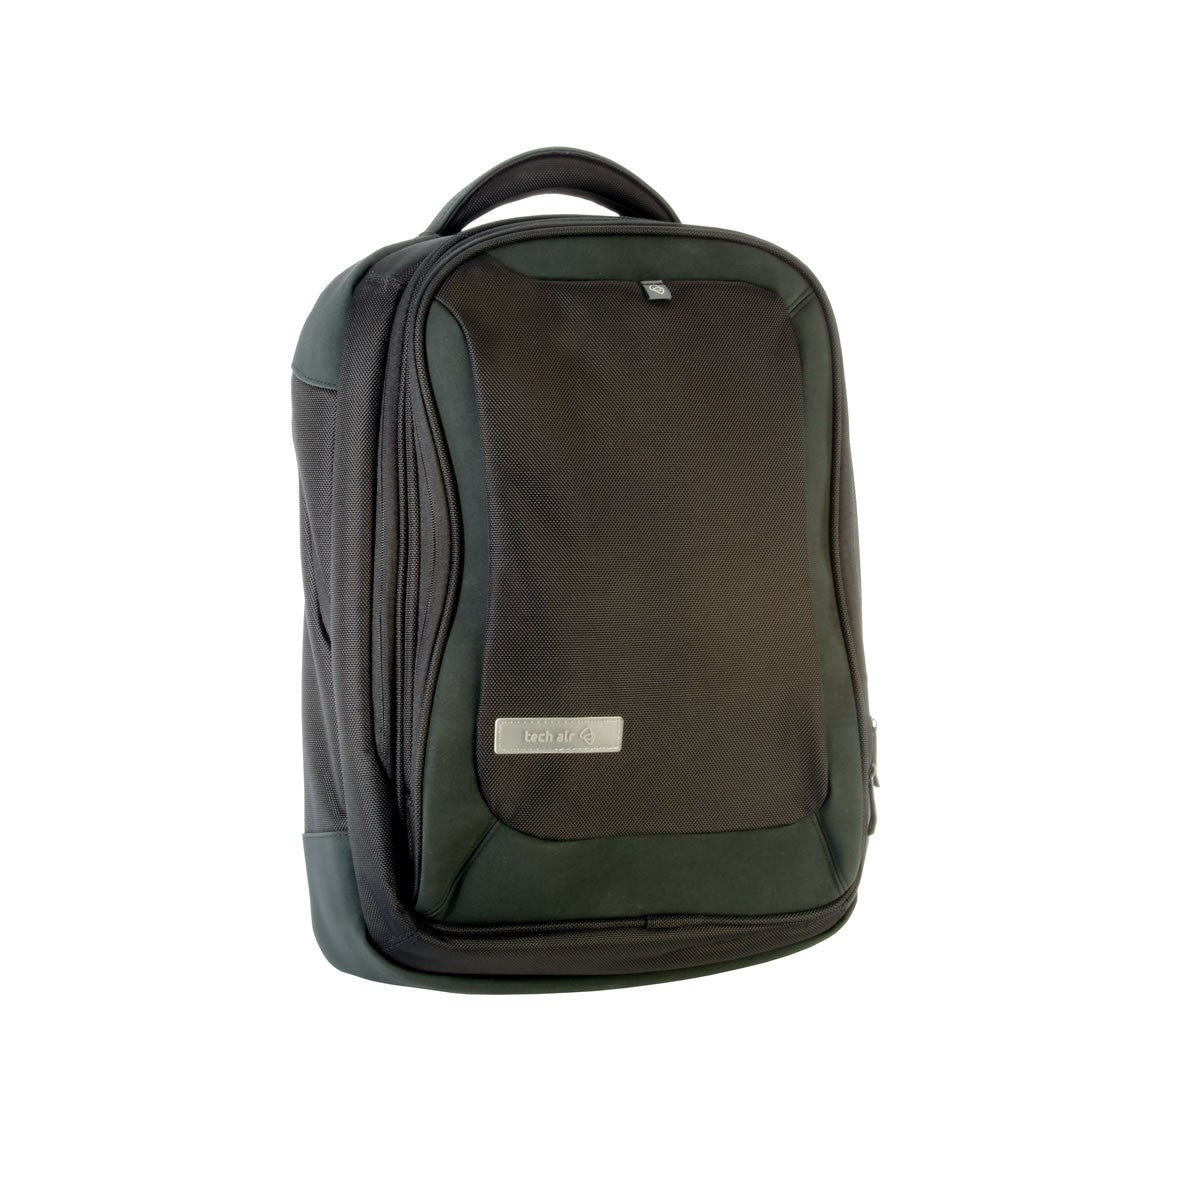 Tech air Series 5 Laptop Backpack - Bolsa para transporte de notebook - 15.6" - preto